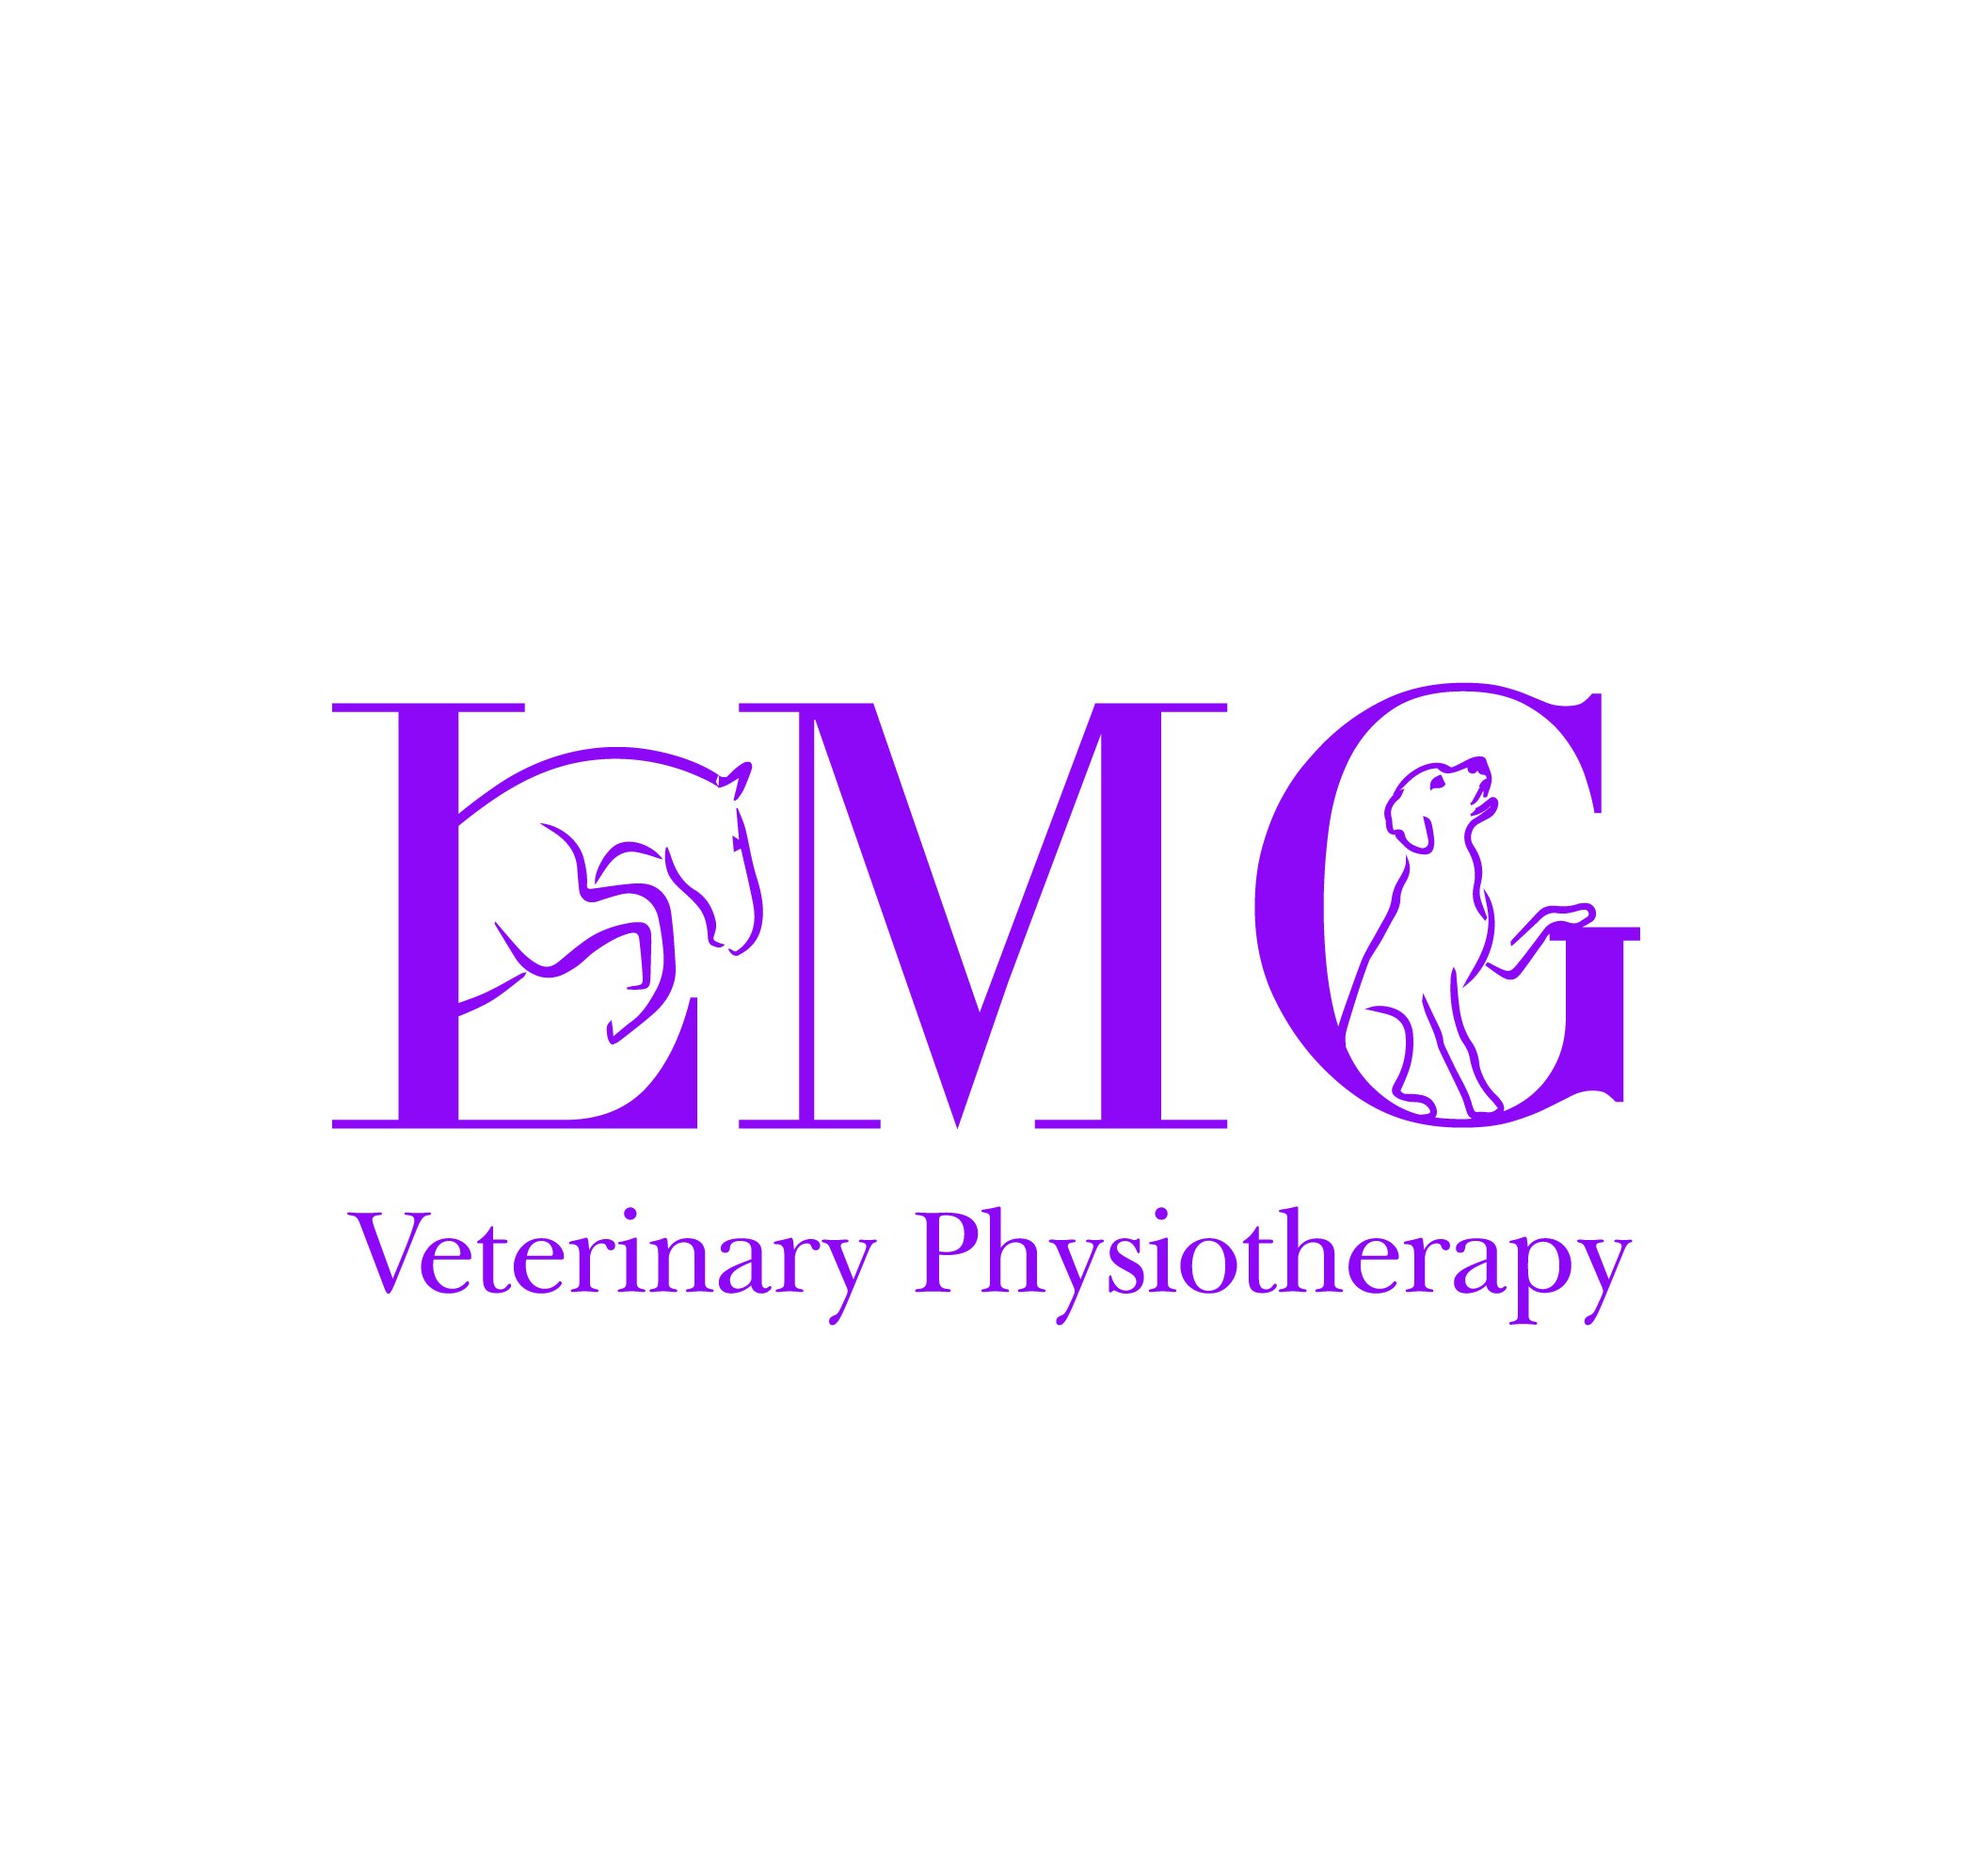 LMG Veterinary Physiotherapy Final-02.jpg